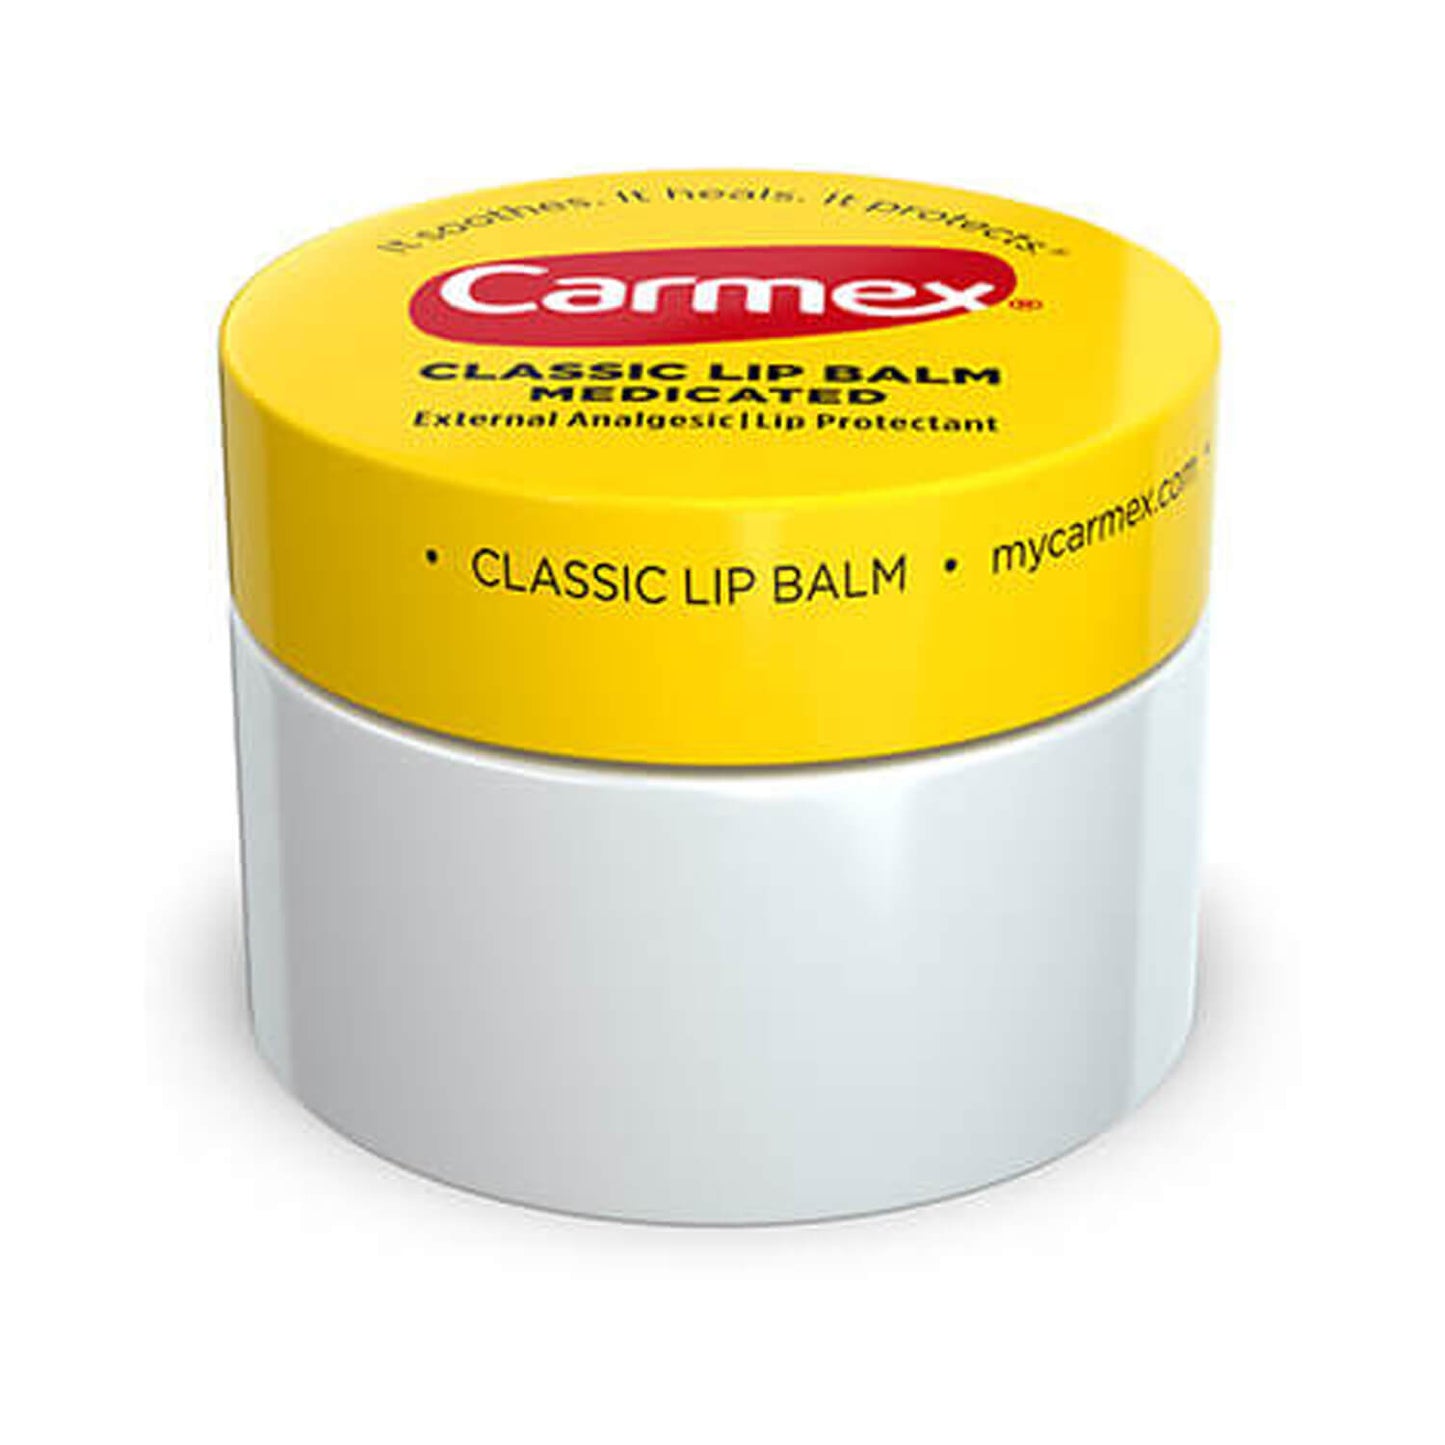 Carmex Lip Balm Original Jar